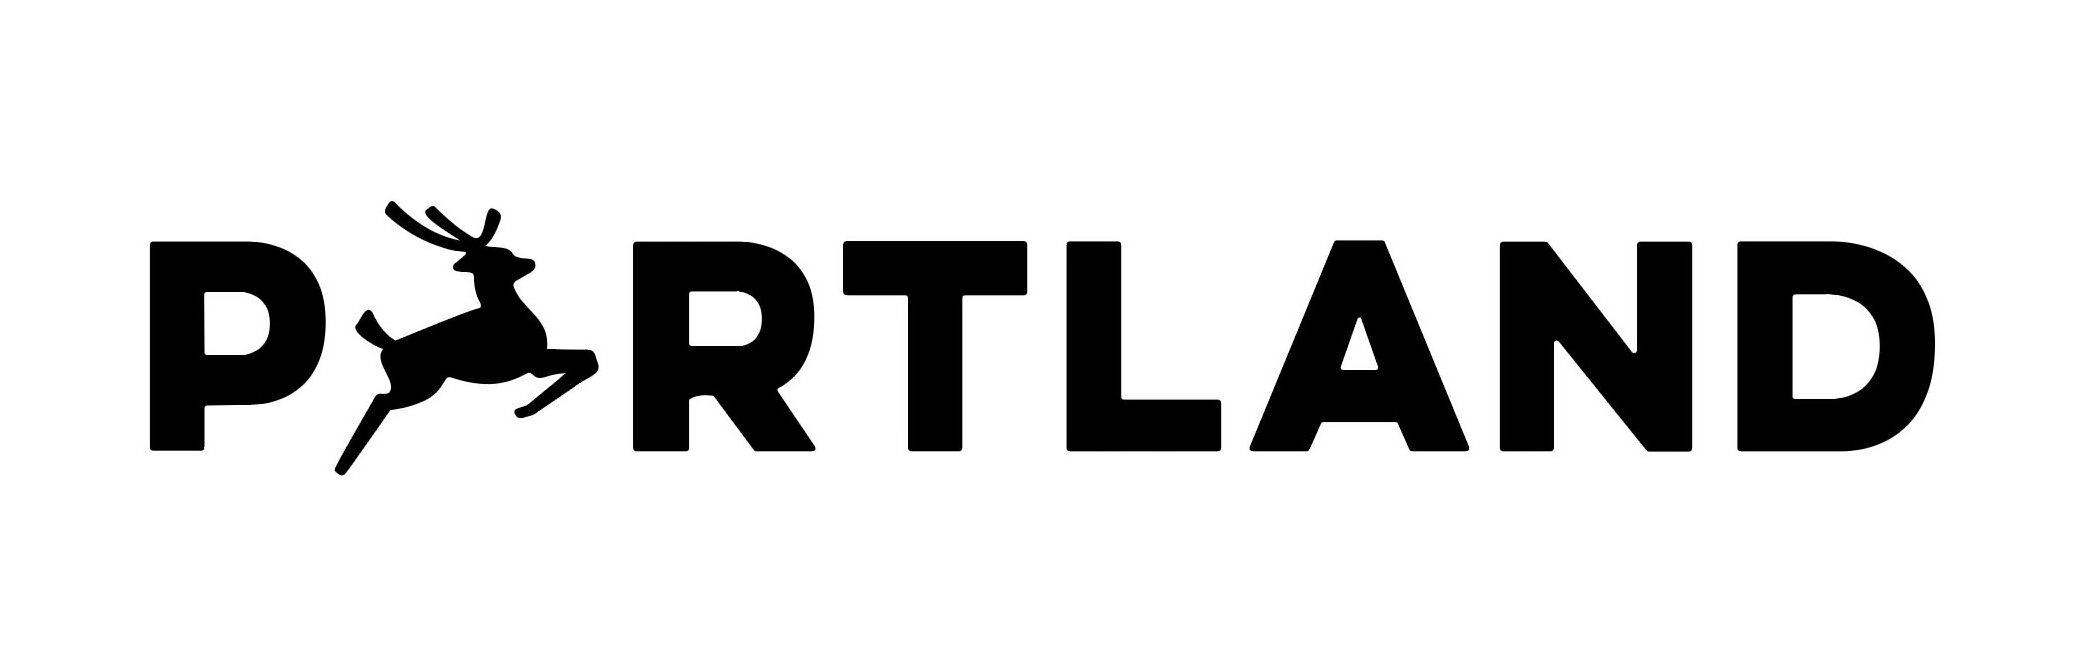 Trademark Logo PORTLAND